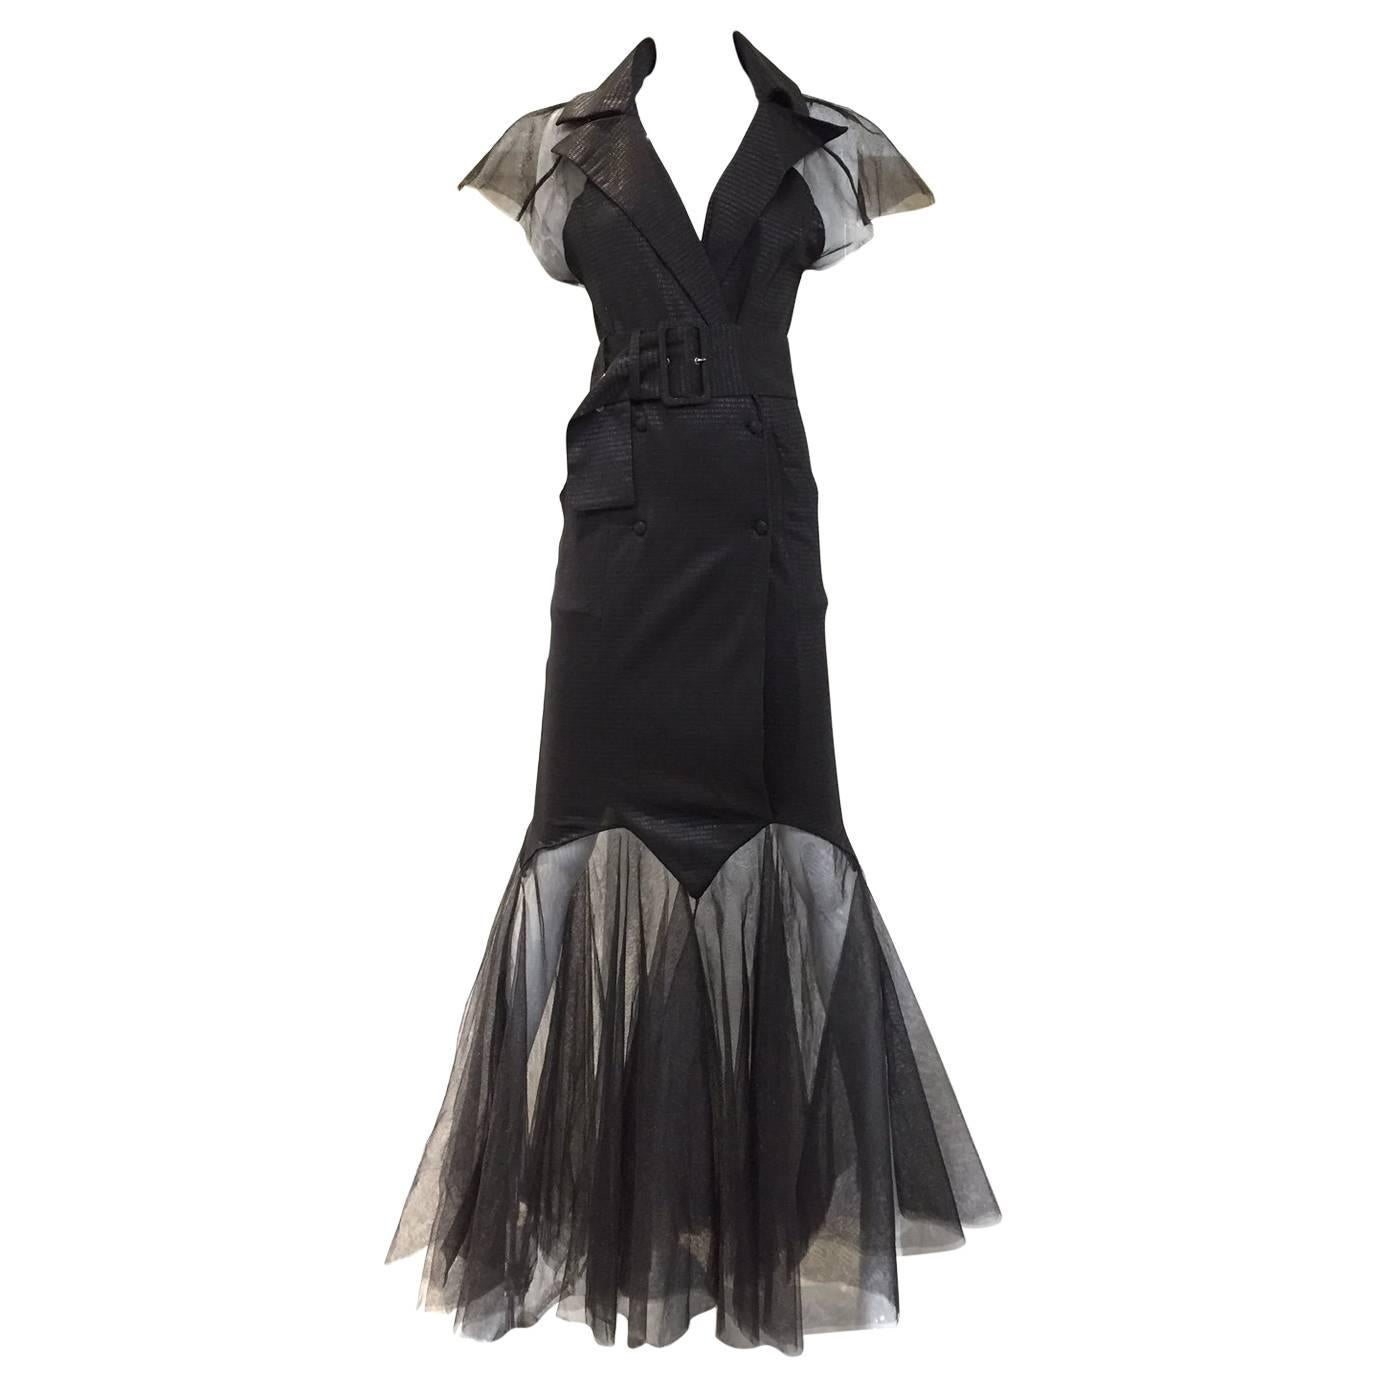 Incredible KARL LAGERFELD Black Knit Mermaid Dress with Tulle Sleeve and Hem